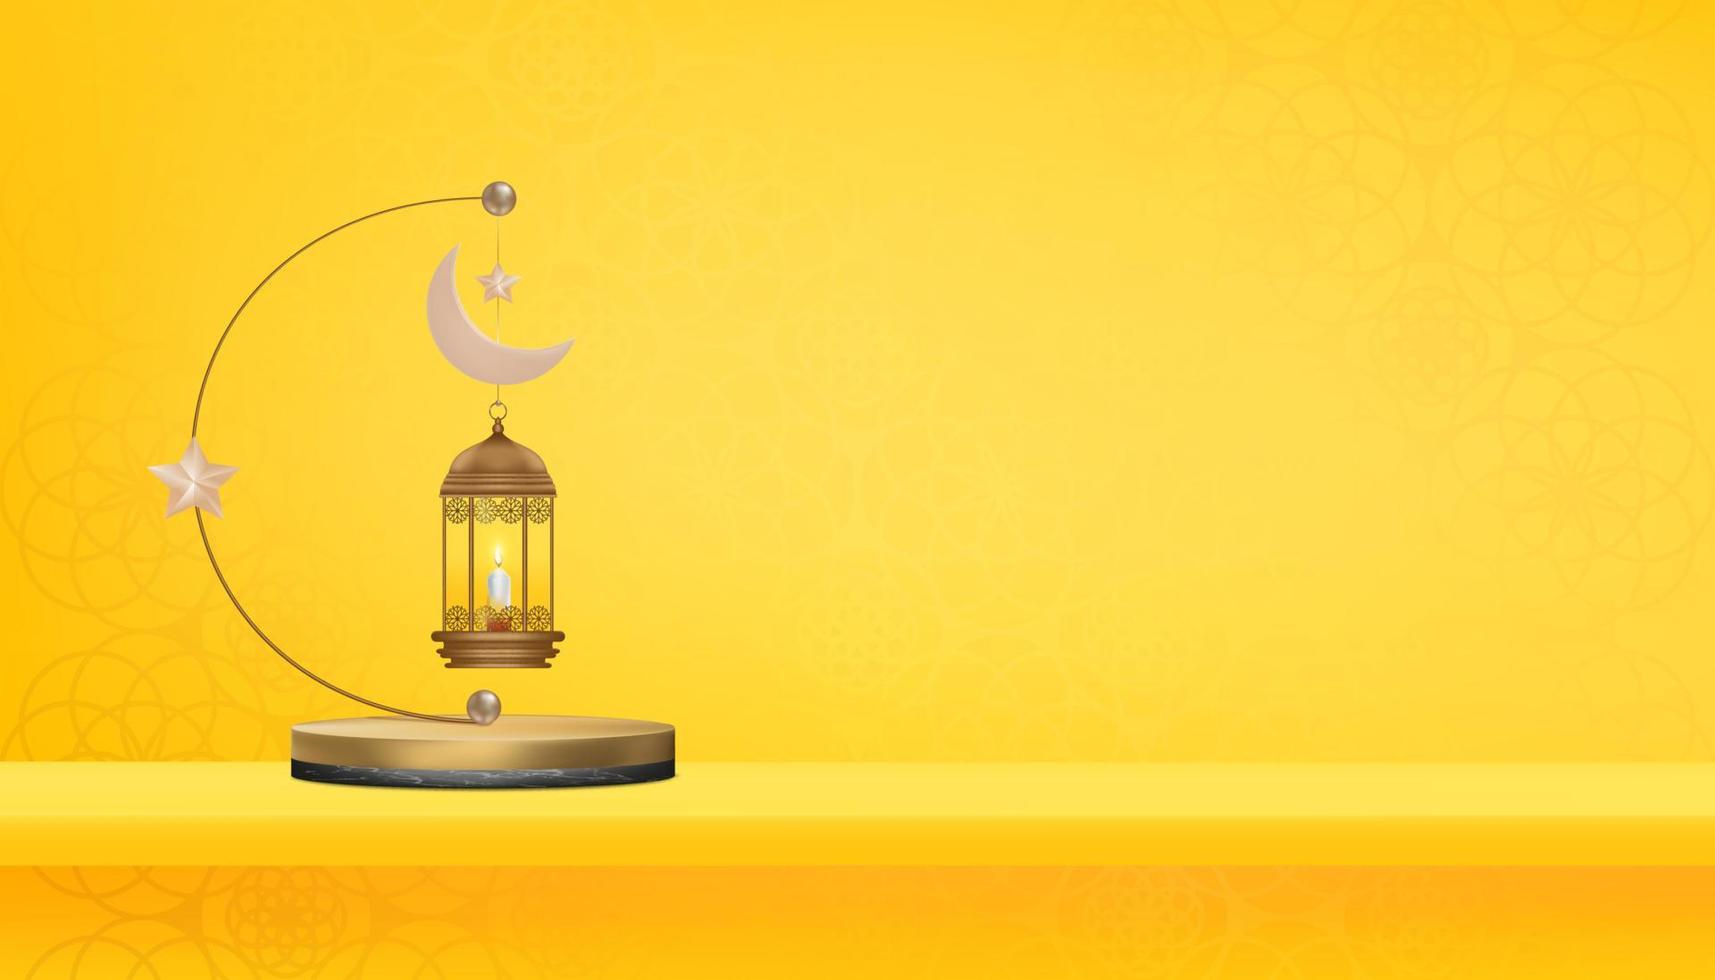 pódio 3d islâmico com lanterna islâmica tradicional, lua crescente e estrela em fundo amarelo, religião de bandeira vetorial do simbólico muçulmano, eid ul fitr, ramadan kareem, eid al adha, eid mubarak, eid el kabir vetor